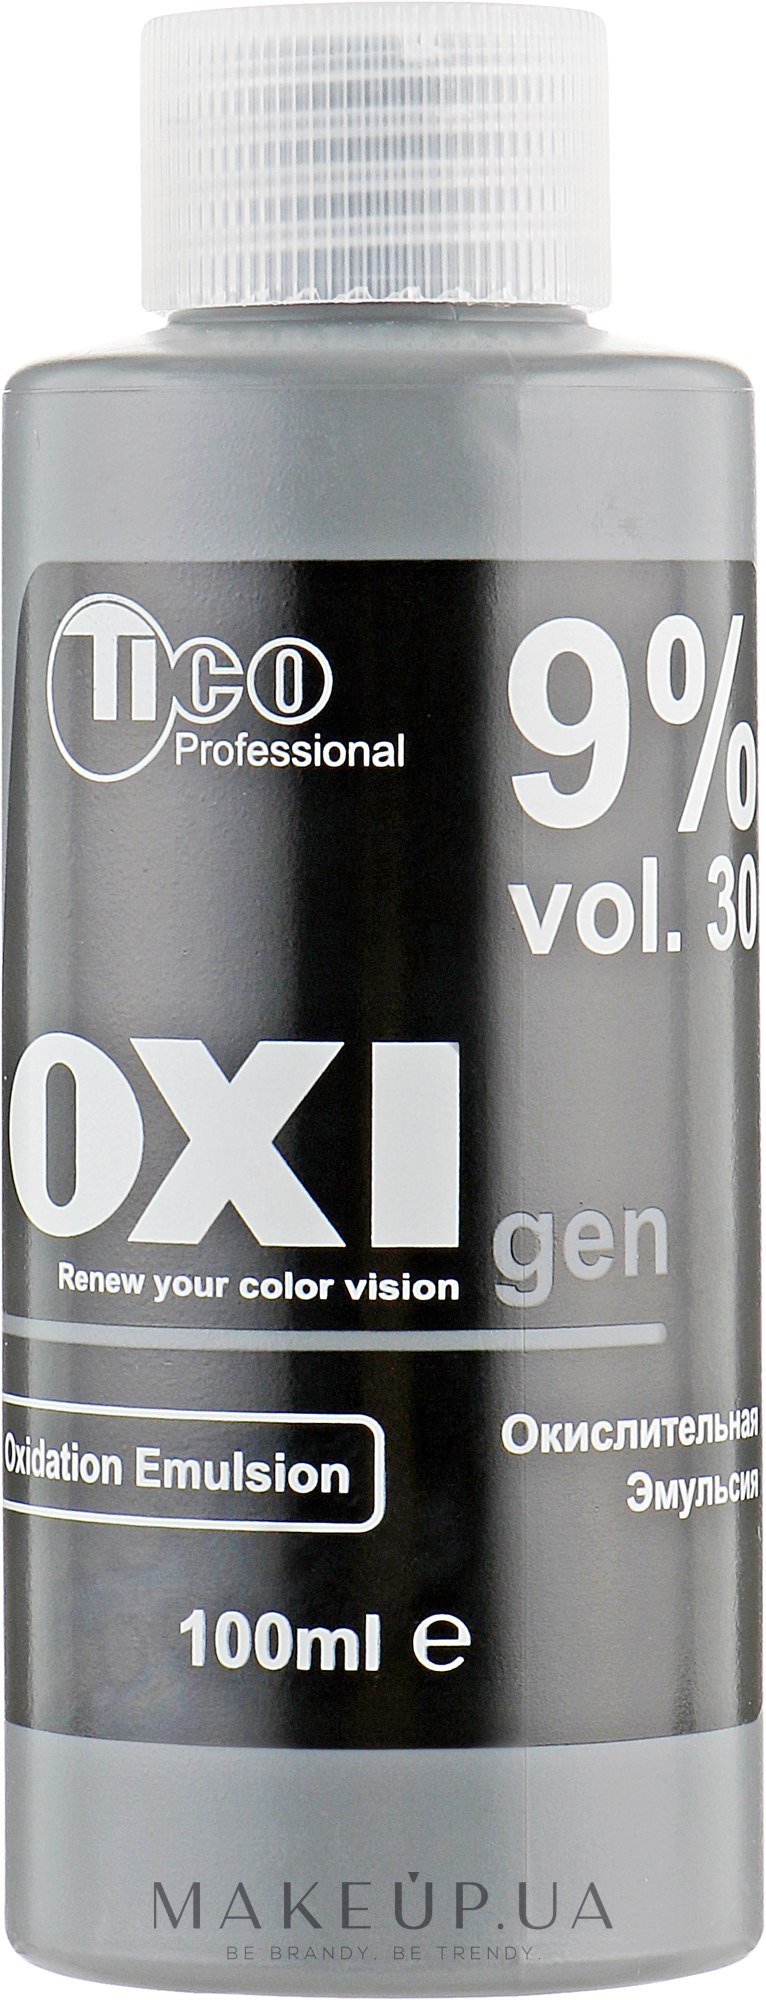 Окислювальна емульсія для інтенсивної крем-фарби Ticolor Classic 9% - Tico Professional Ticolor Classic OXIgen — фото 100ml